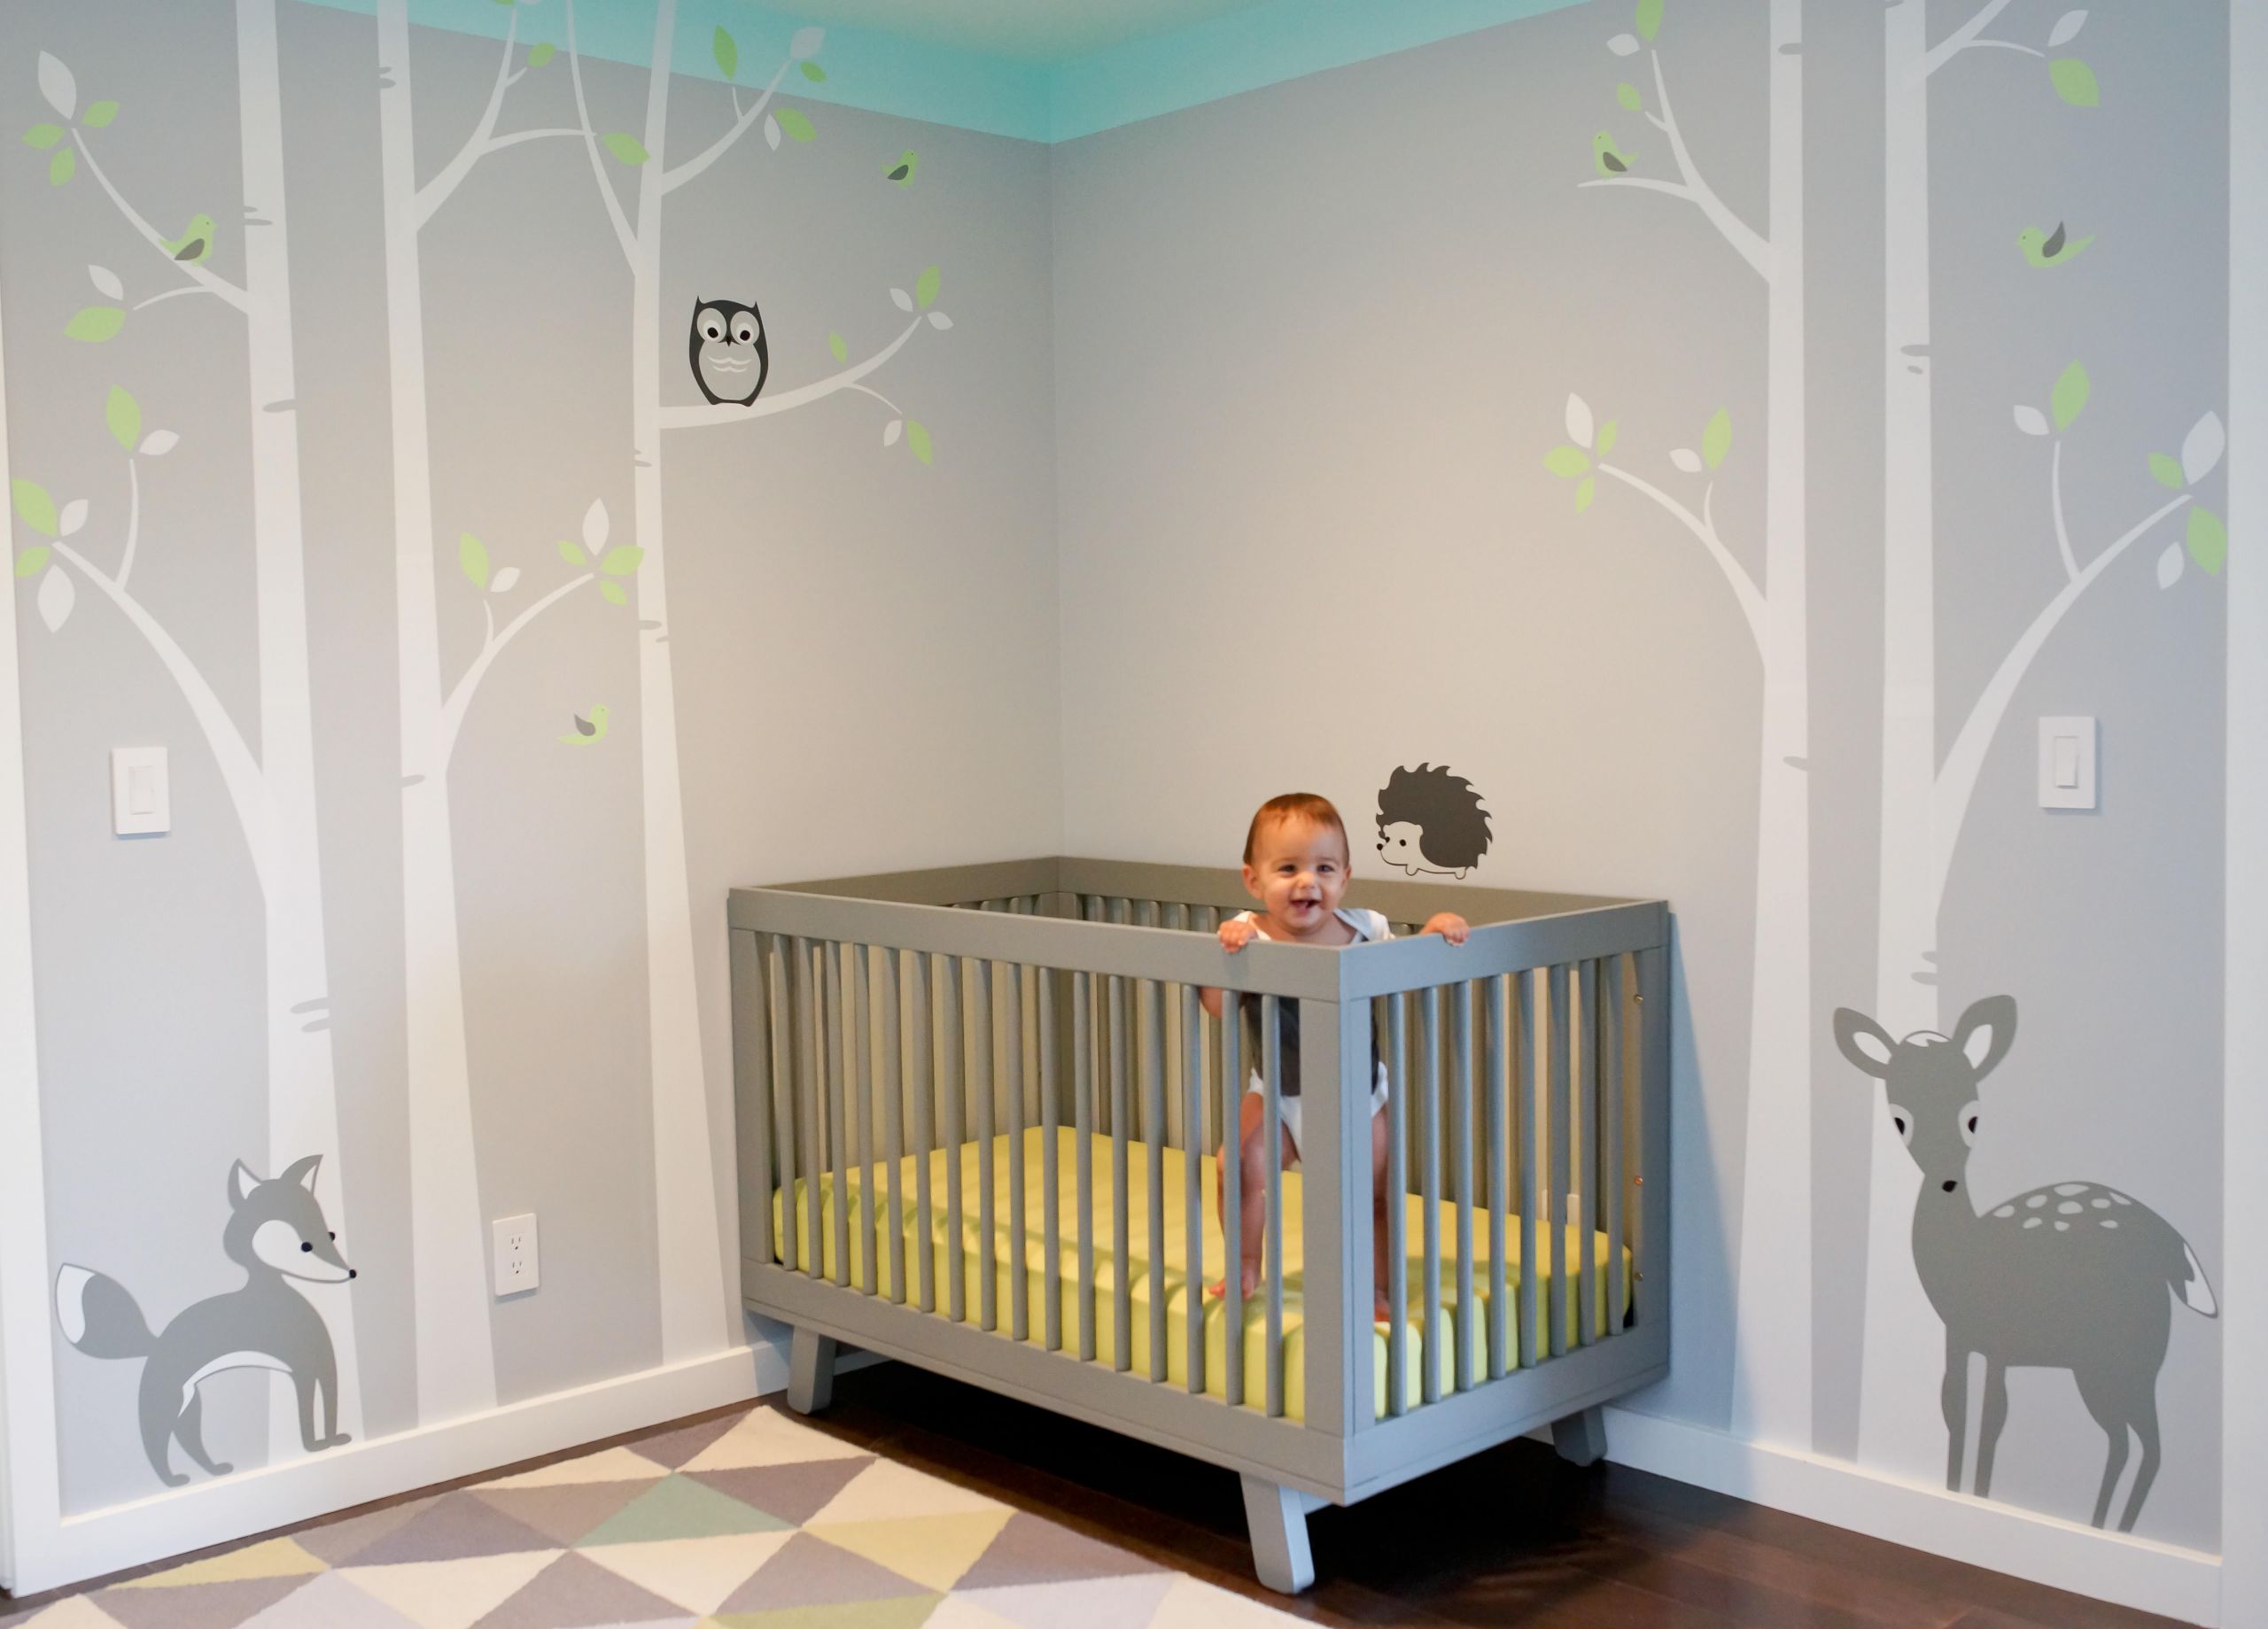 Baby Room Wall Decorating Ideas
 13 Wall Designs Decor Ideas For Nursery